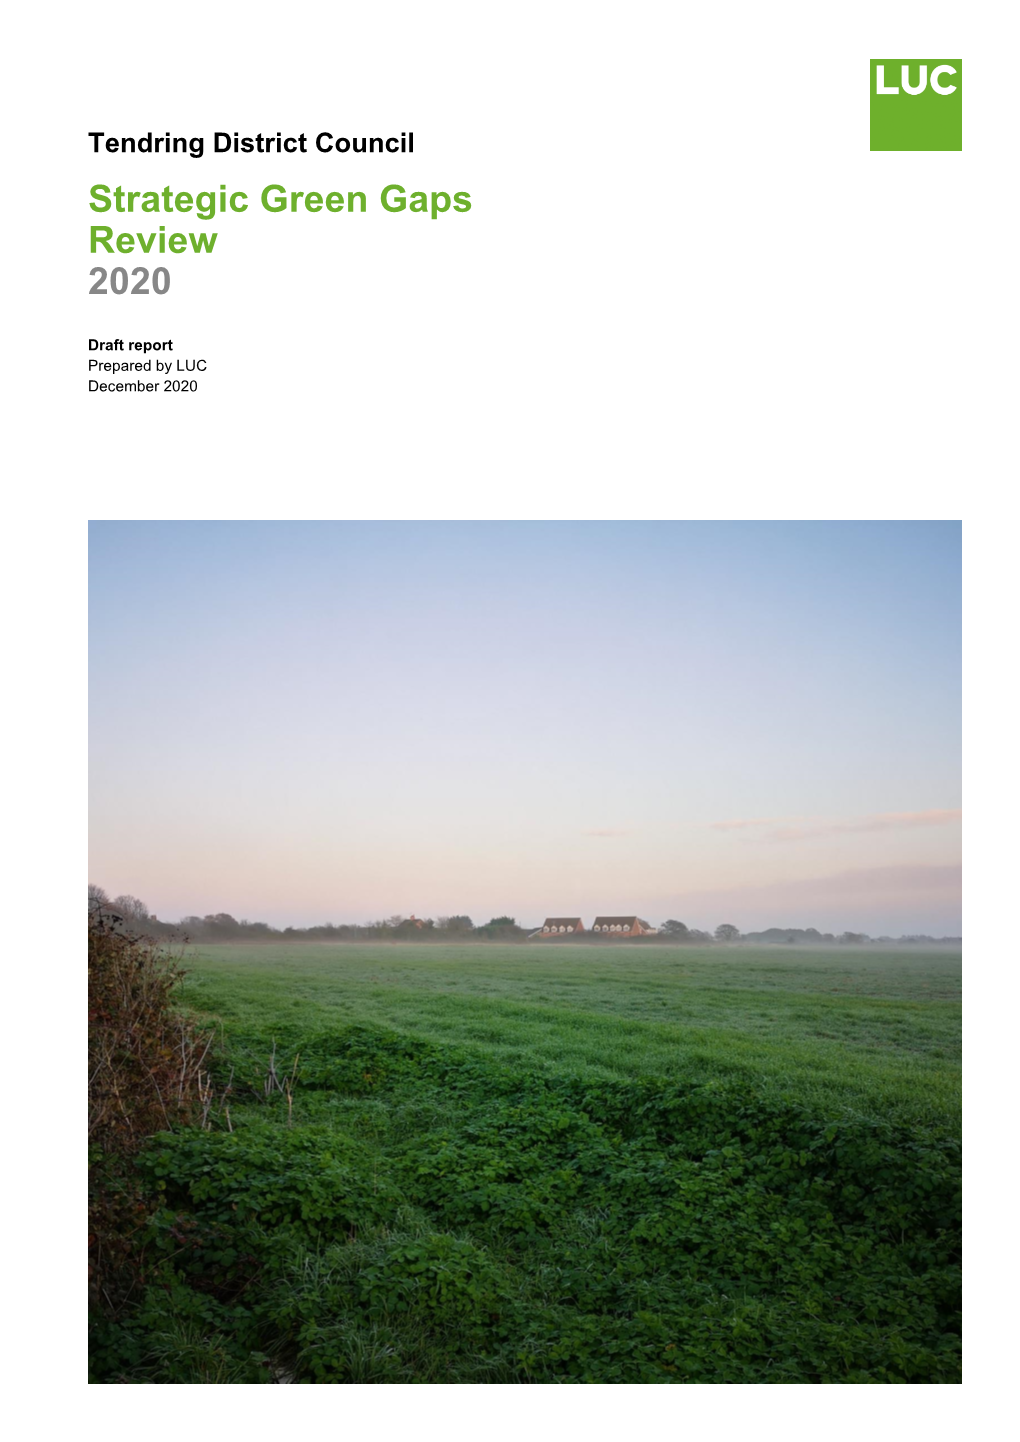 Strategic Green Gaps Review 2020